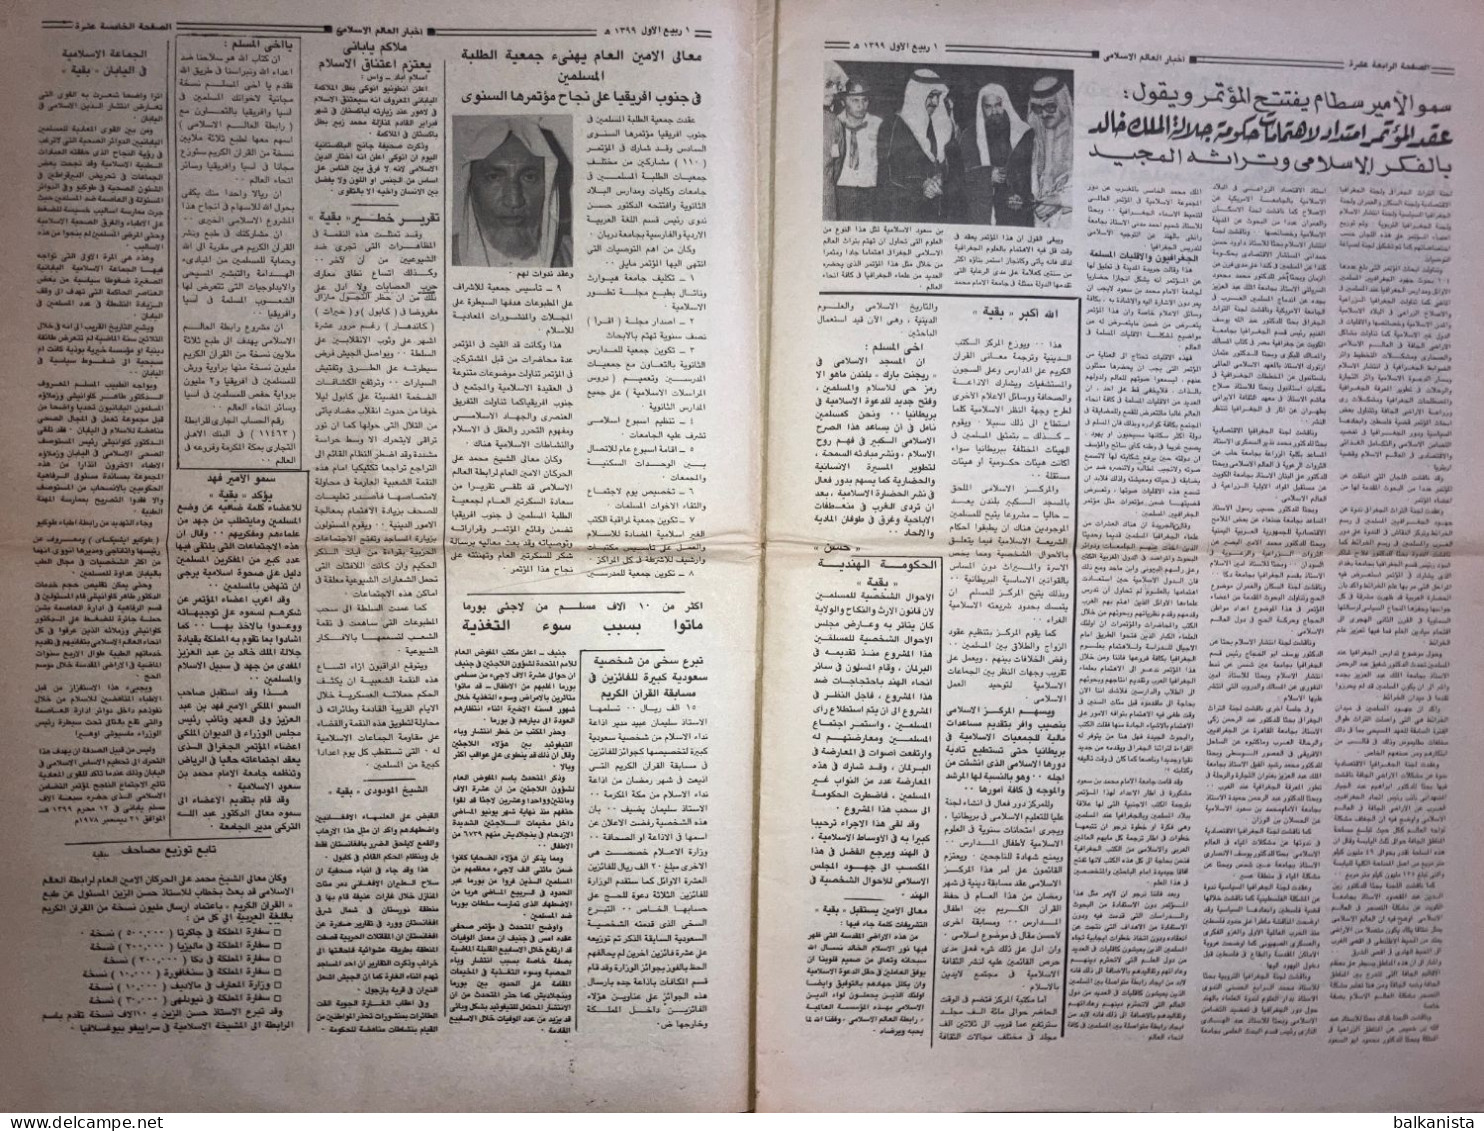 Saudi Arabia Akhbar al-Alam al-Islami Newspaper 29 January 1979